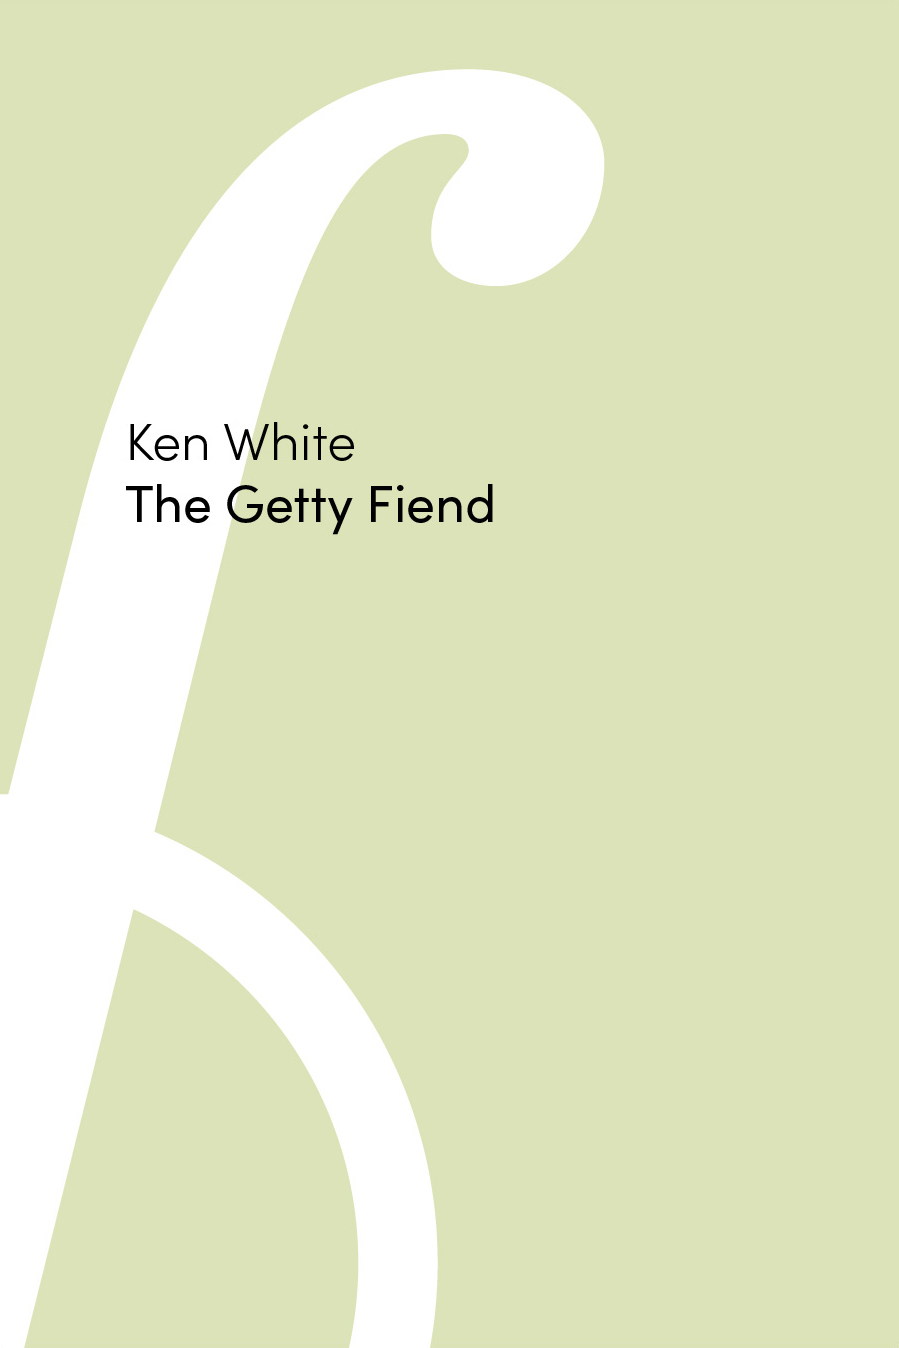 The Getty Fiend (punctum books, 2024)